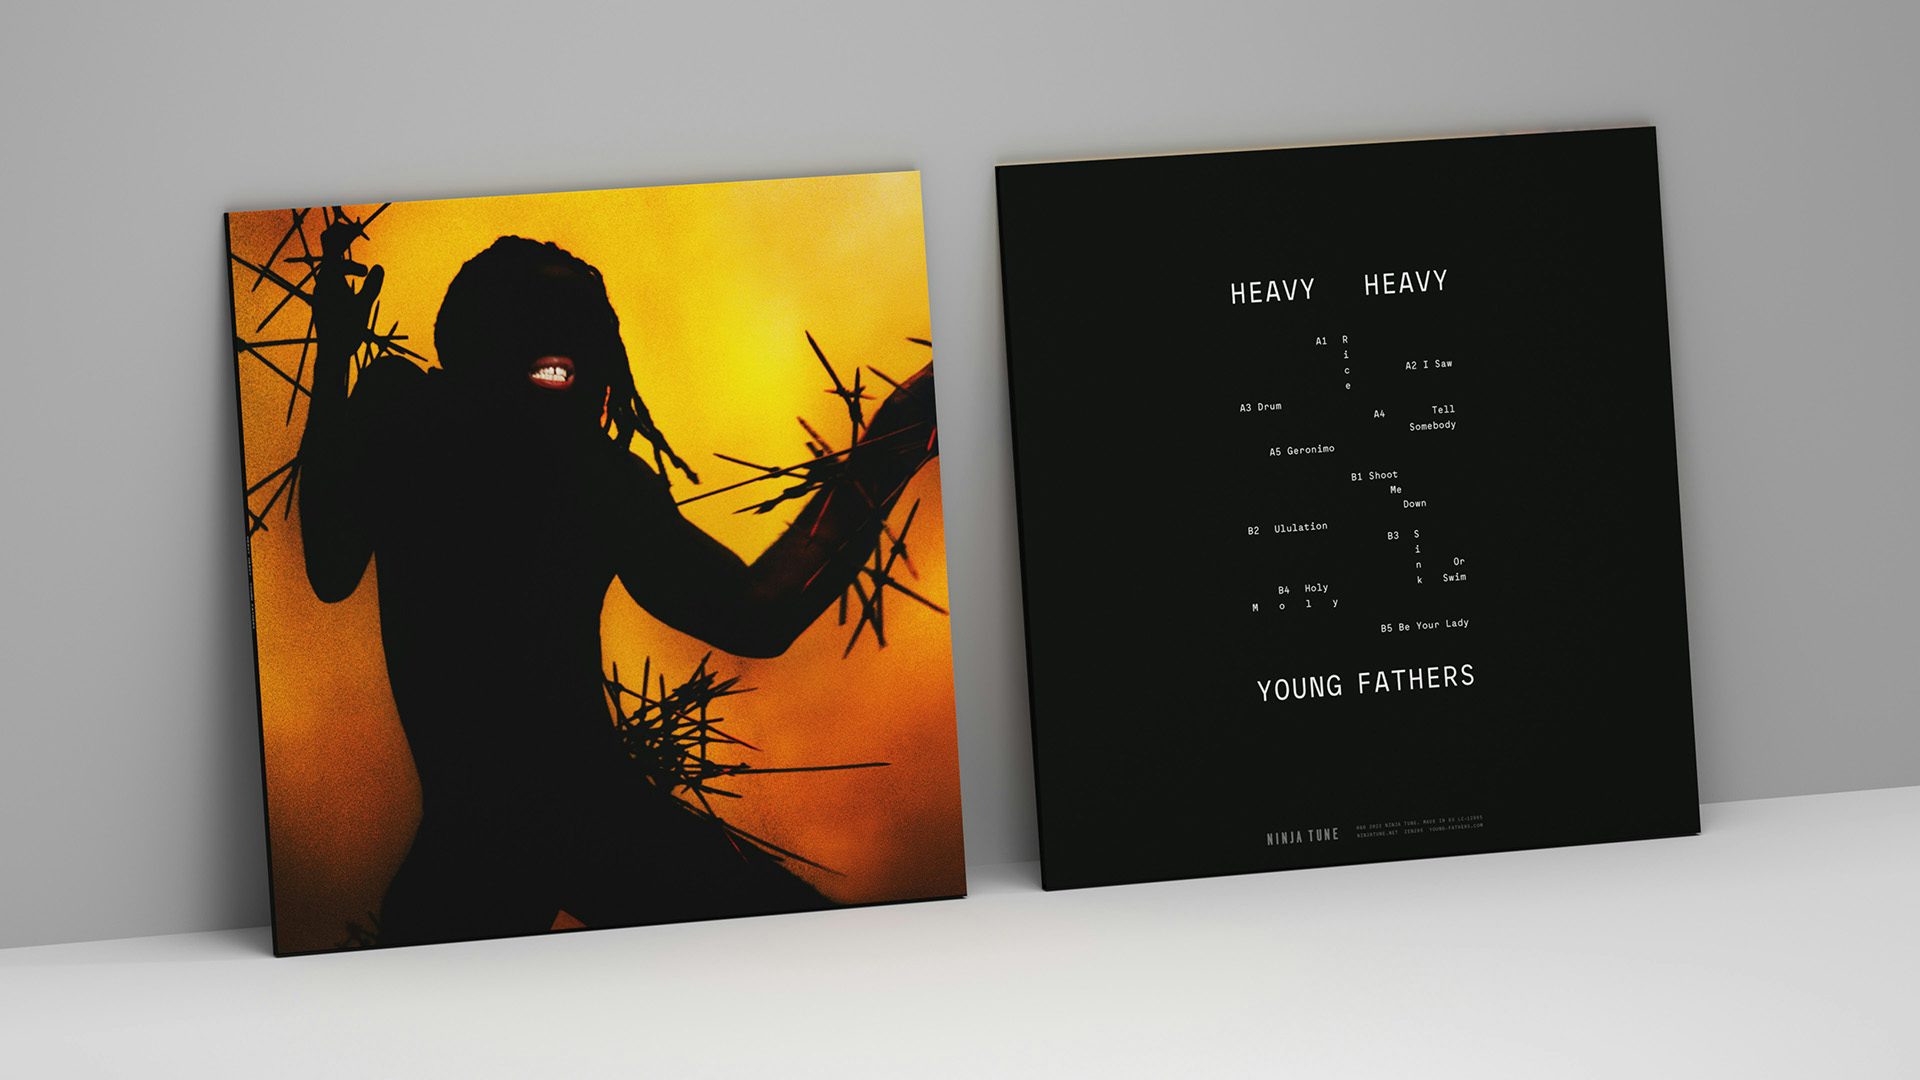 60 Creative Thrash Metal Album Cover Artwork Designs